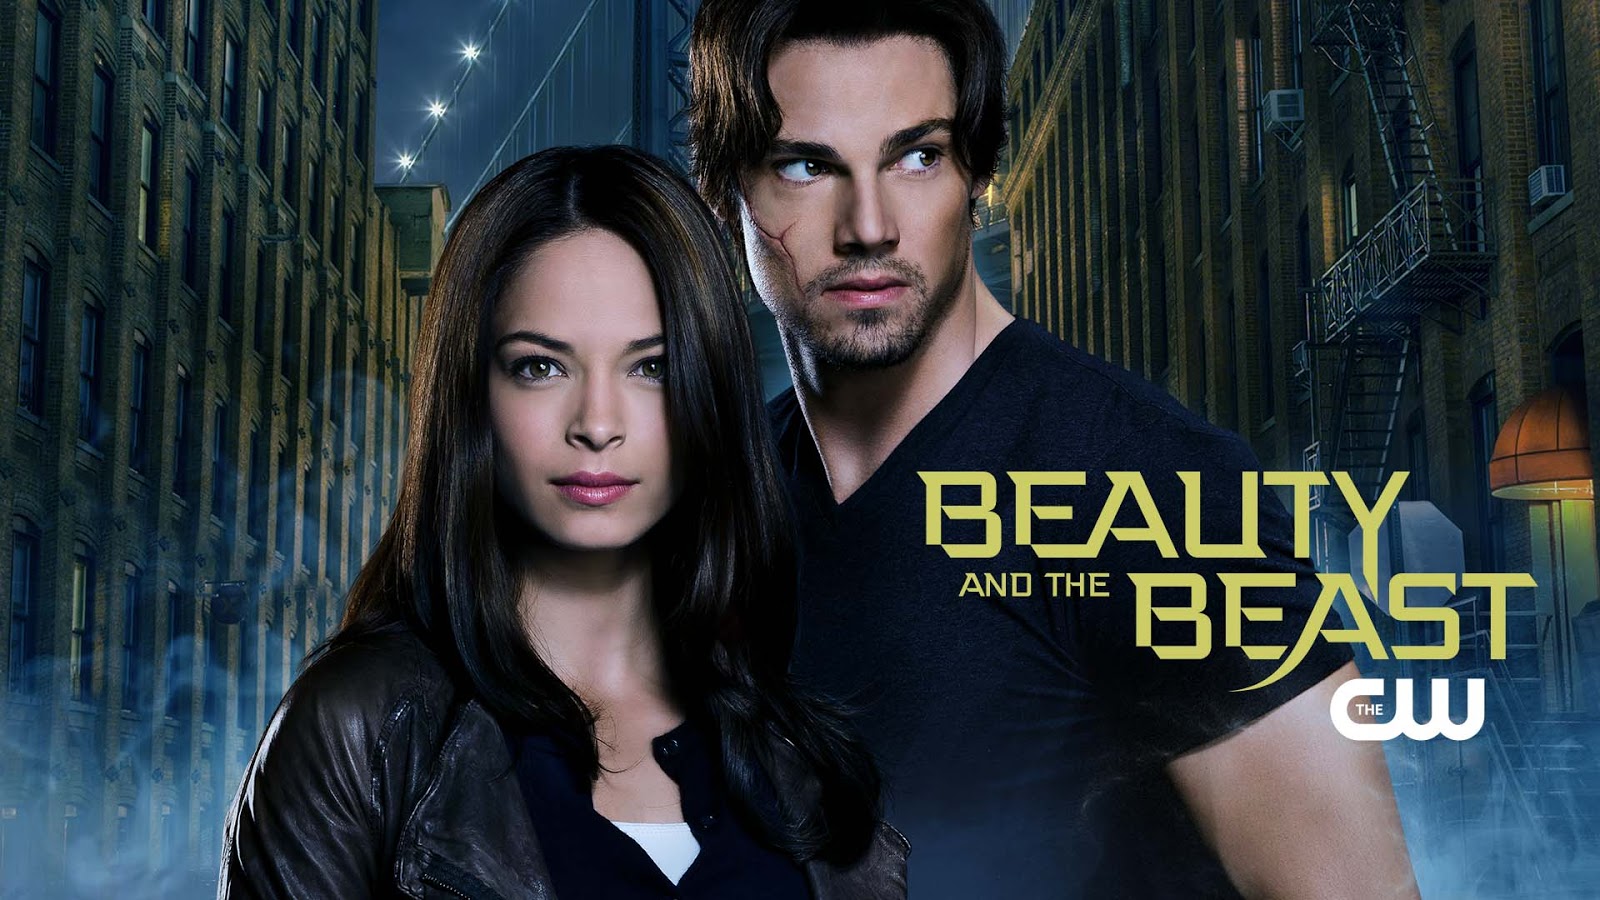 Beauty And The Beast Season 3 โฉมงามล่าพันธุ์อสูร ปี 3 ทุกตอน พากย์ไทย